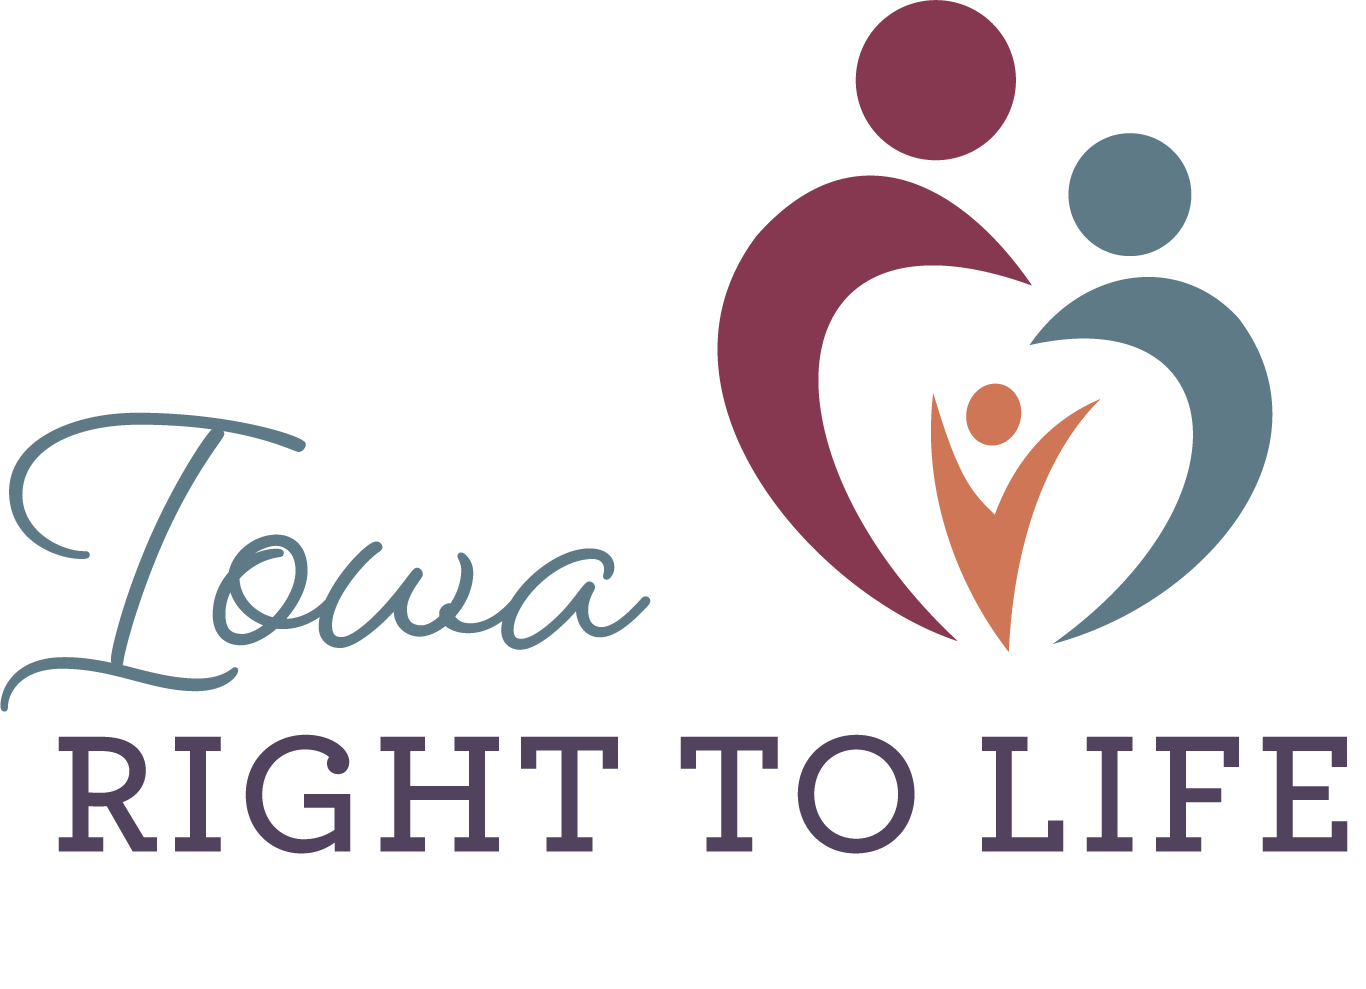 Iowa Right to Life Logo